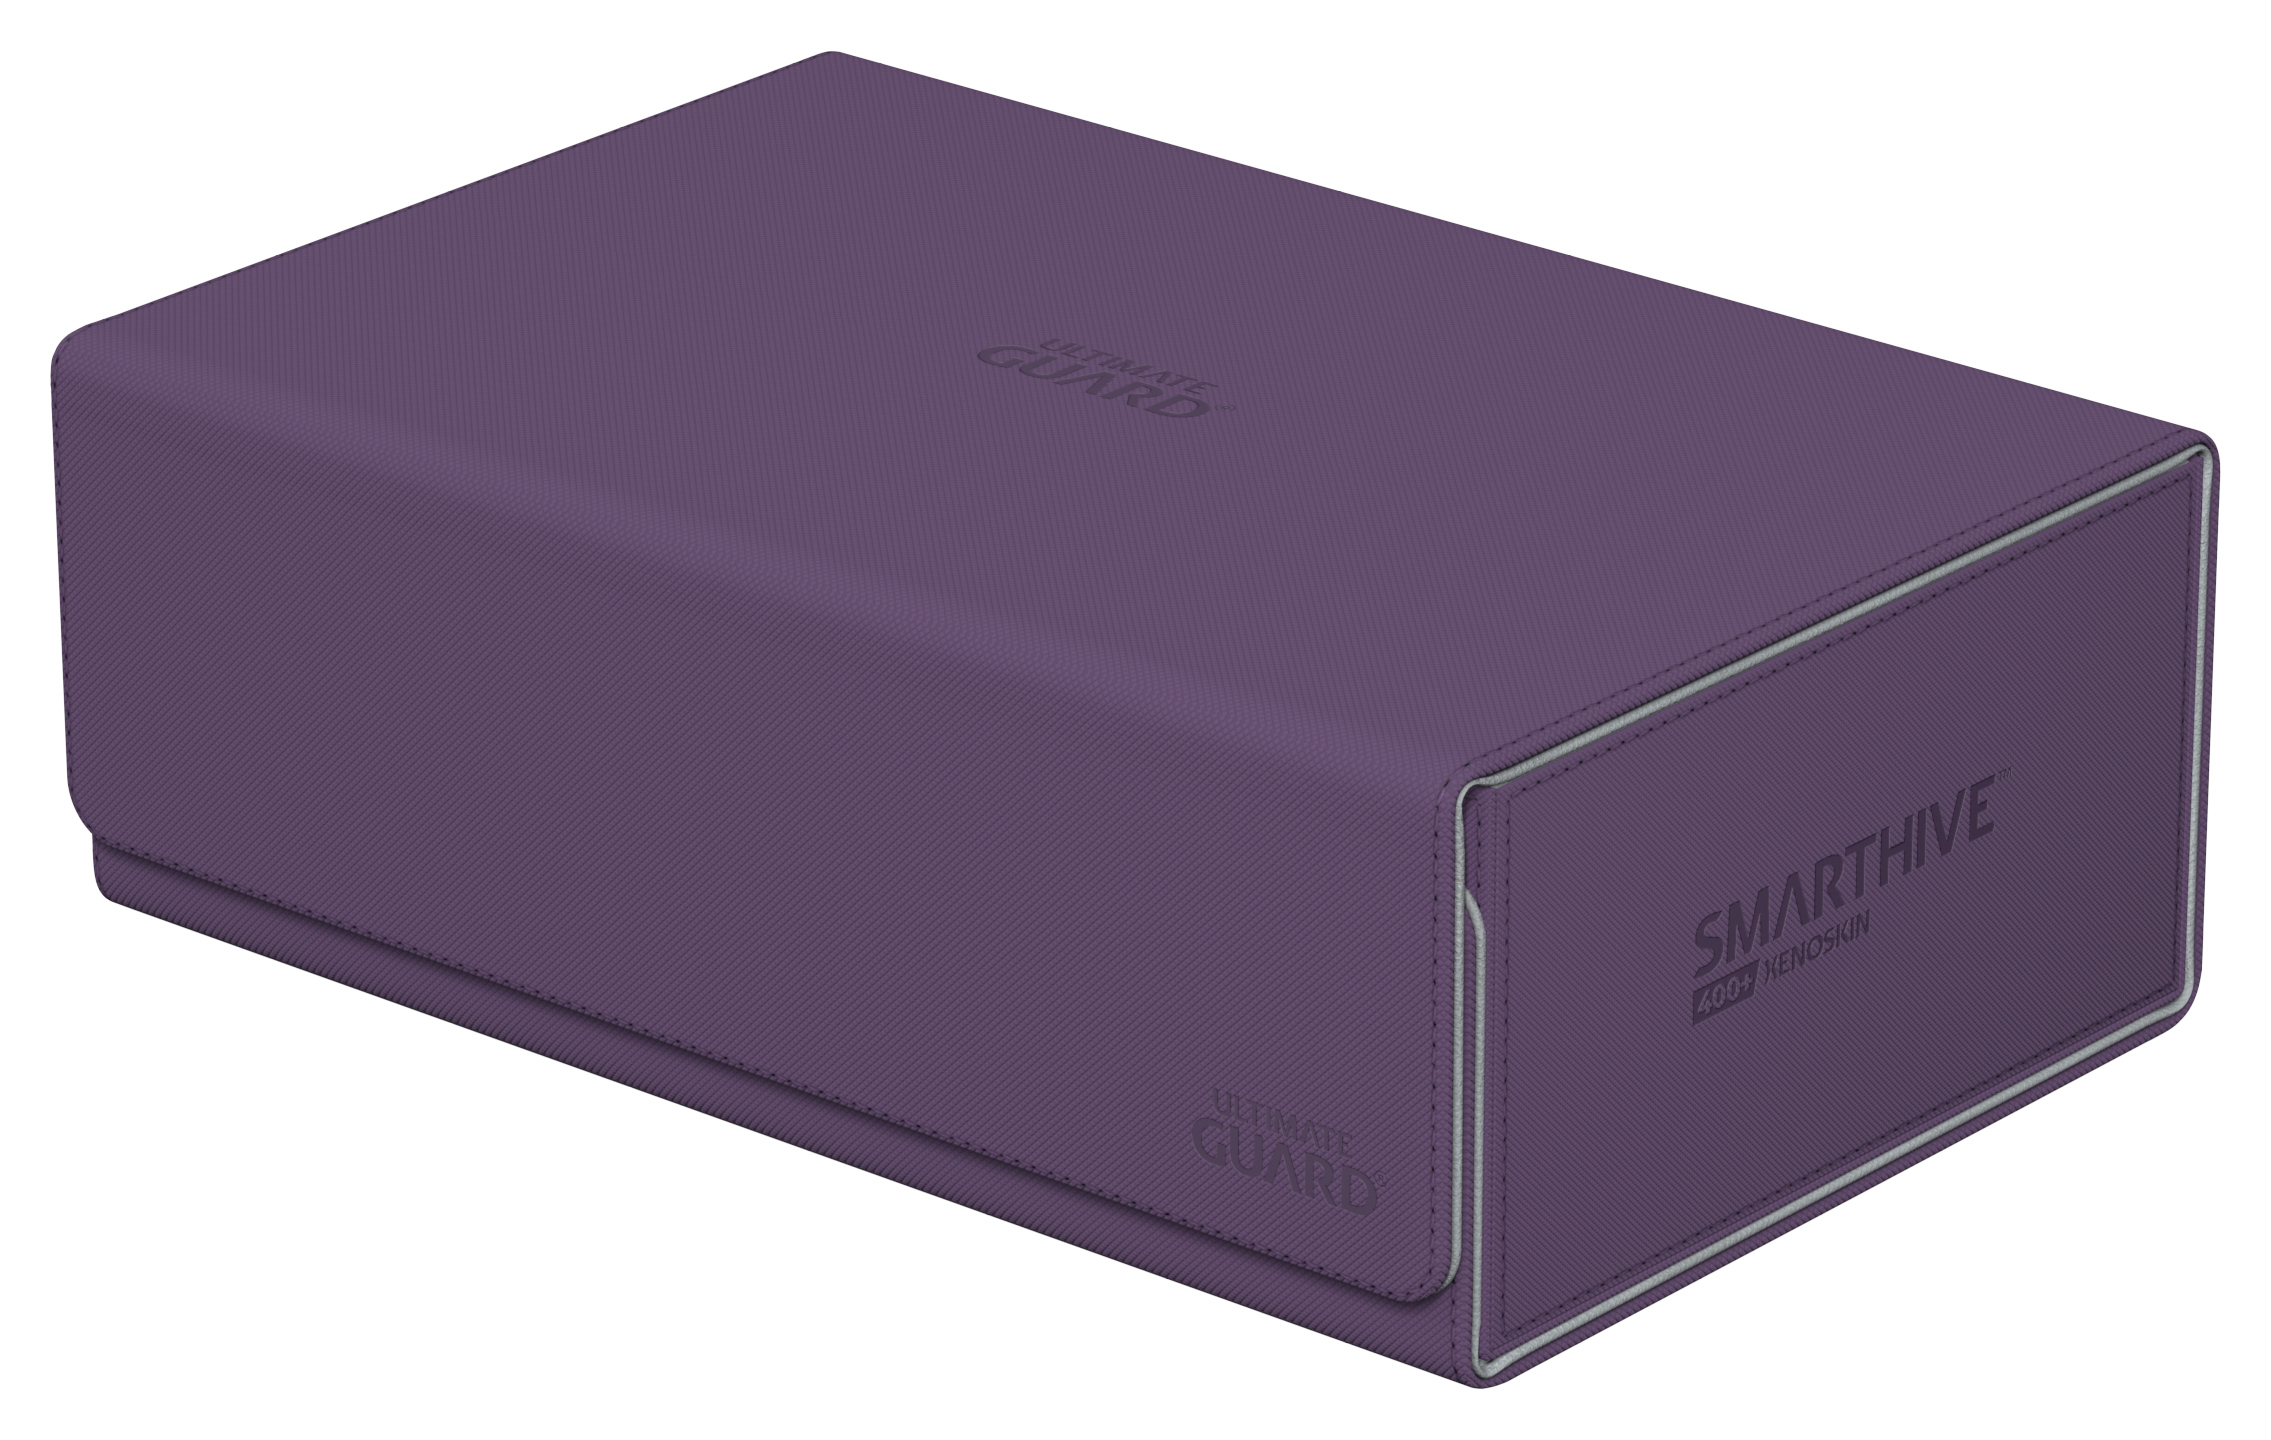 Smarthive Xenoskin | Purple/Grey | 400+ | UGD011122